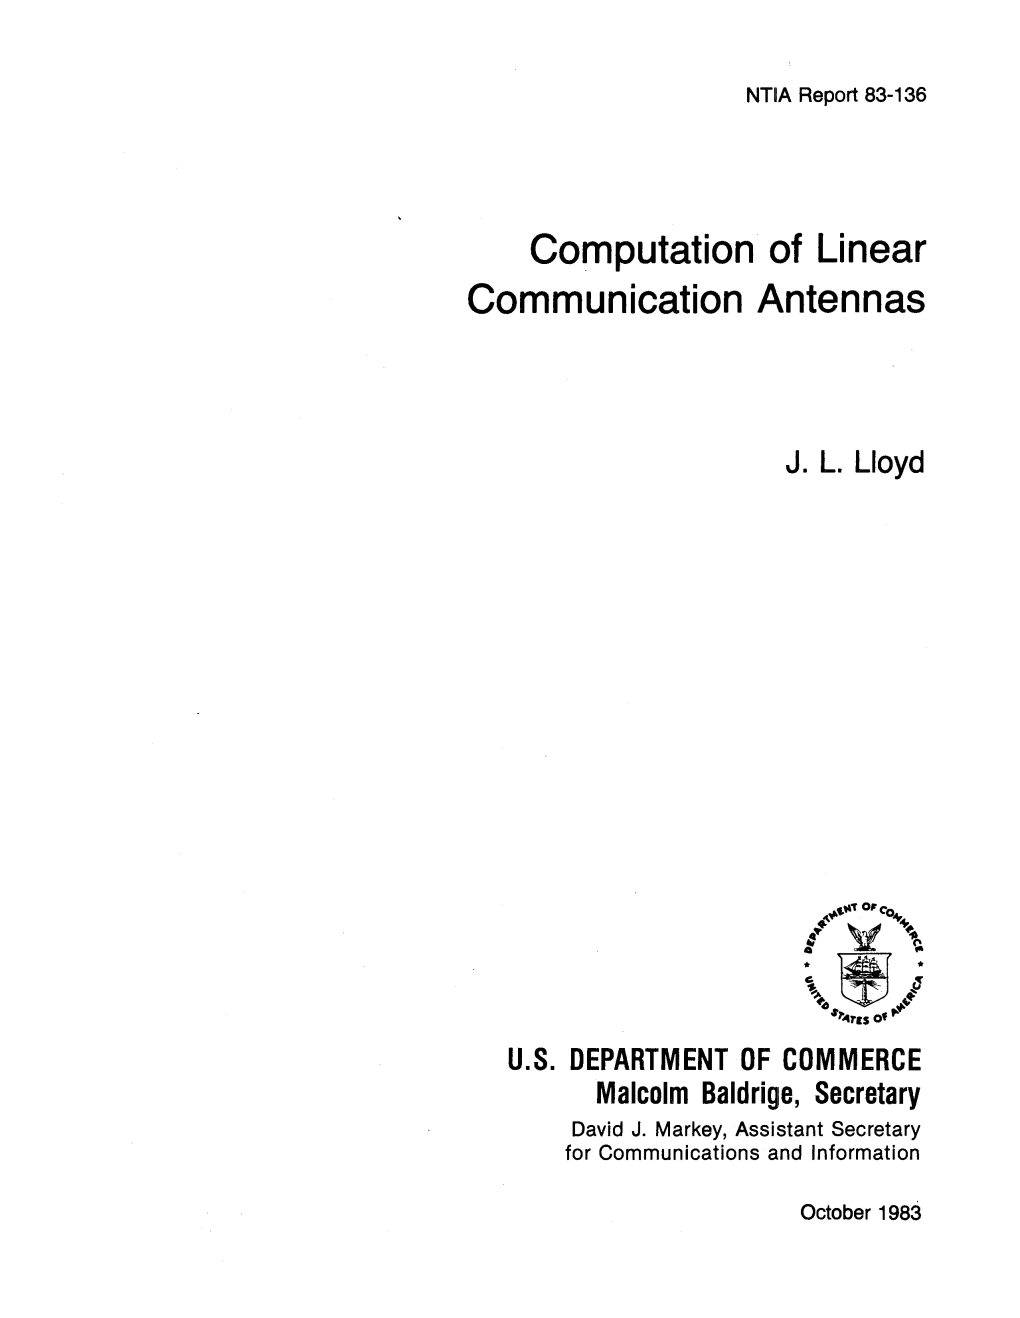 Computation of Linear Communication Antennas